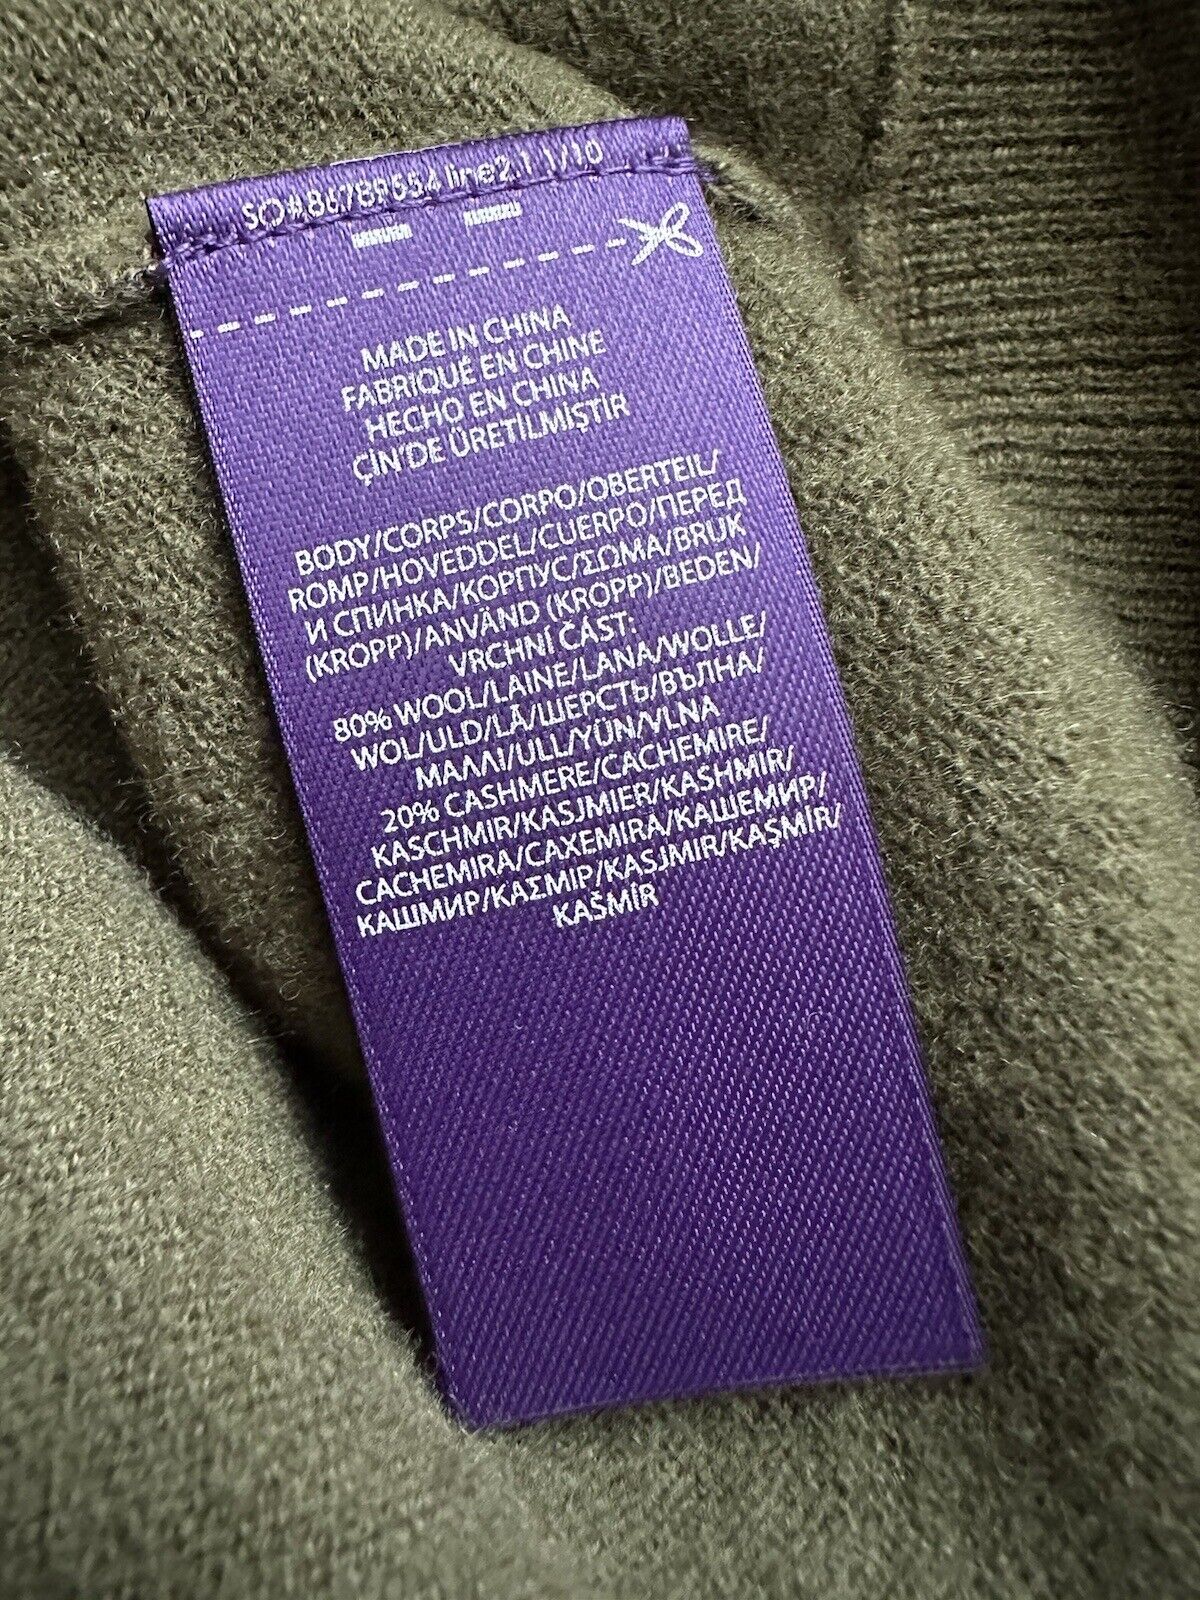 NWT $995 Ralph Lauren Purple Label Wool/Cashmere Jacket with Hoodie Green M